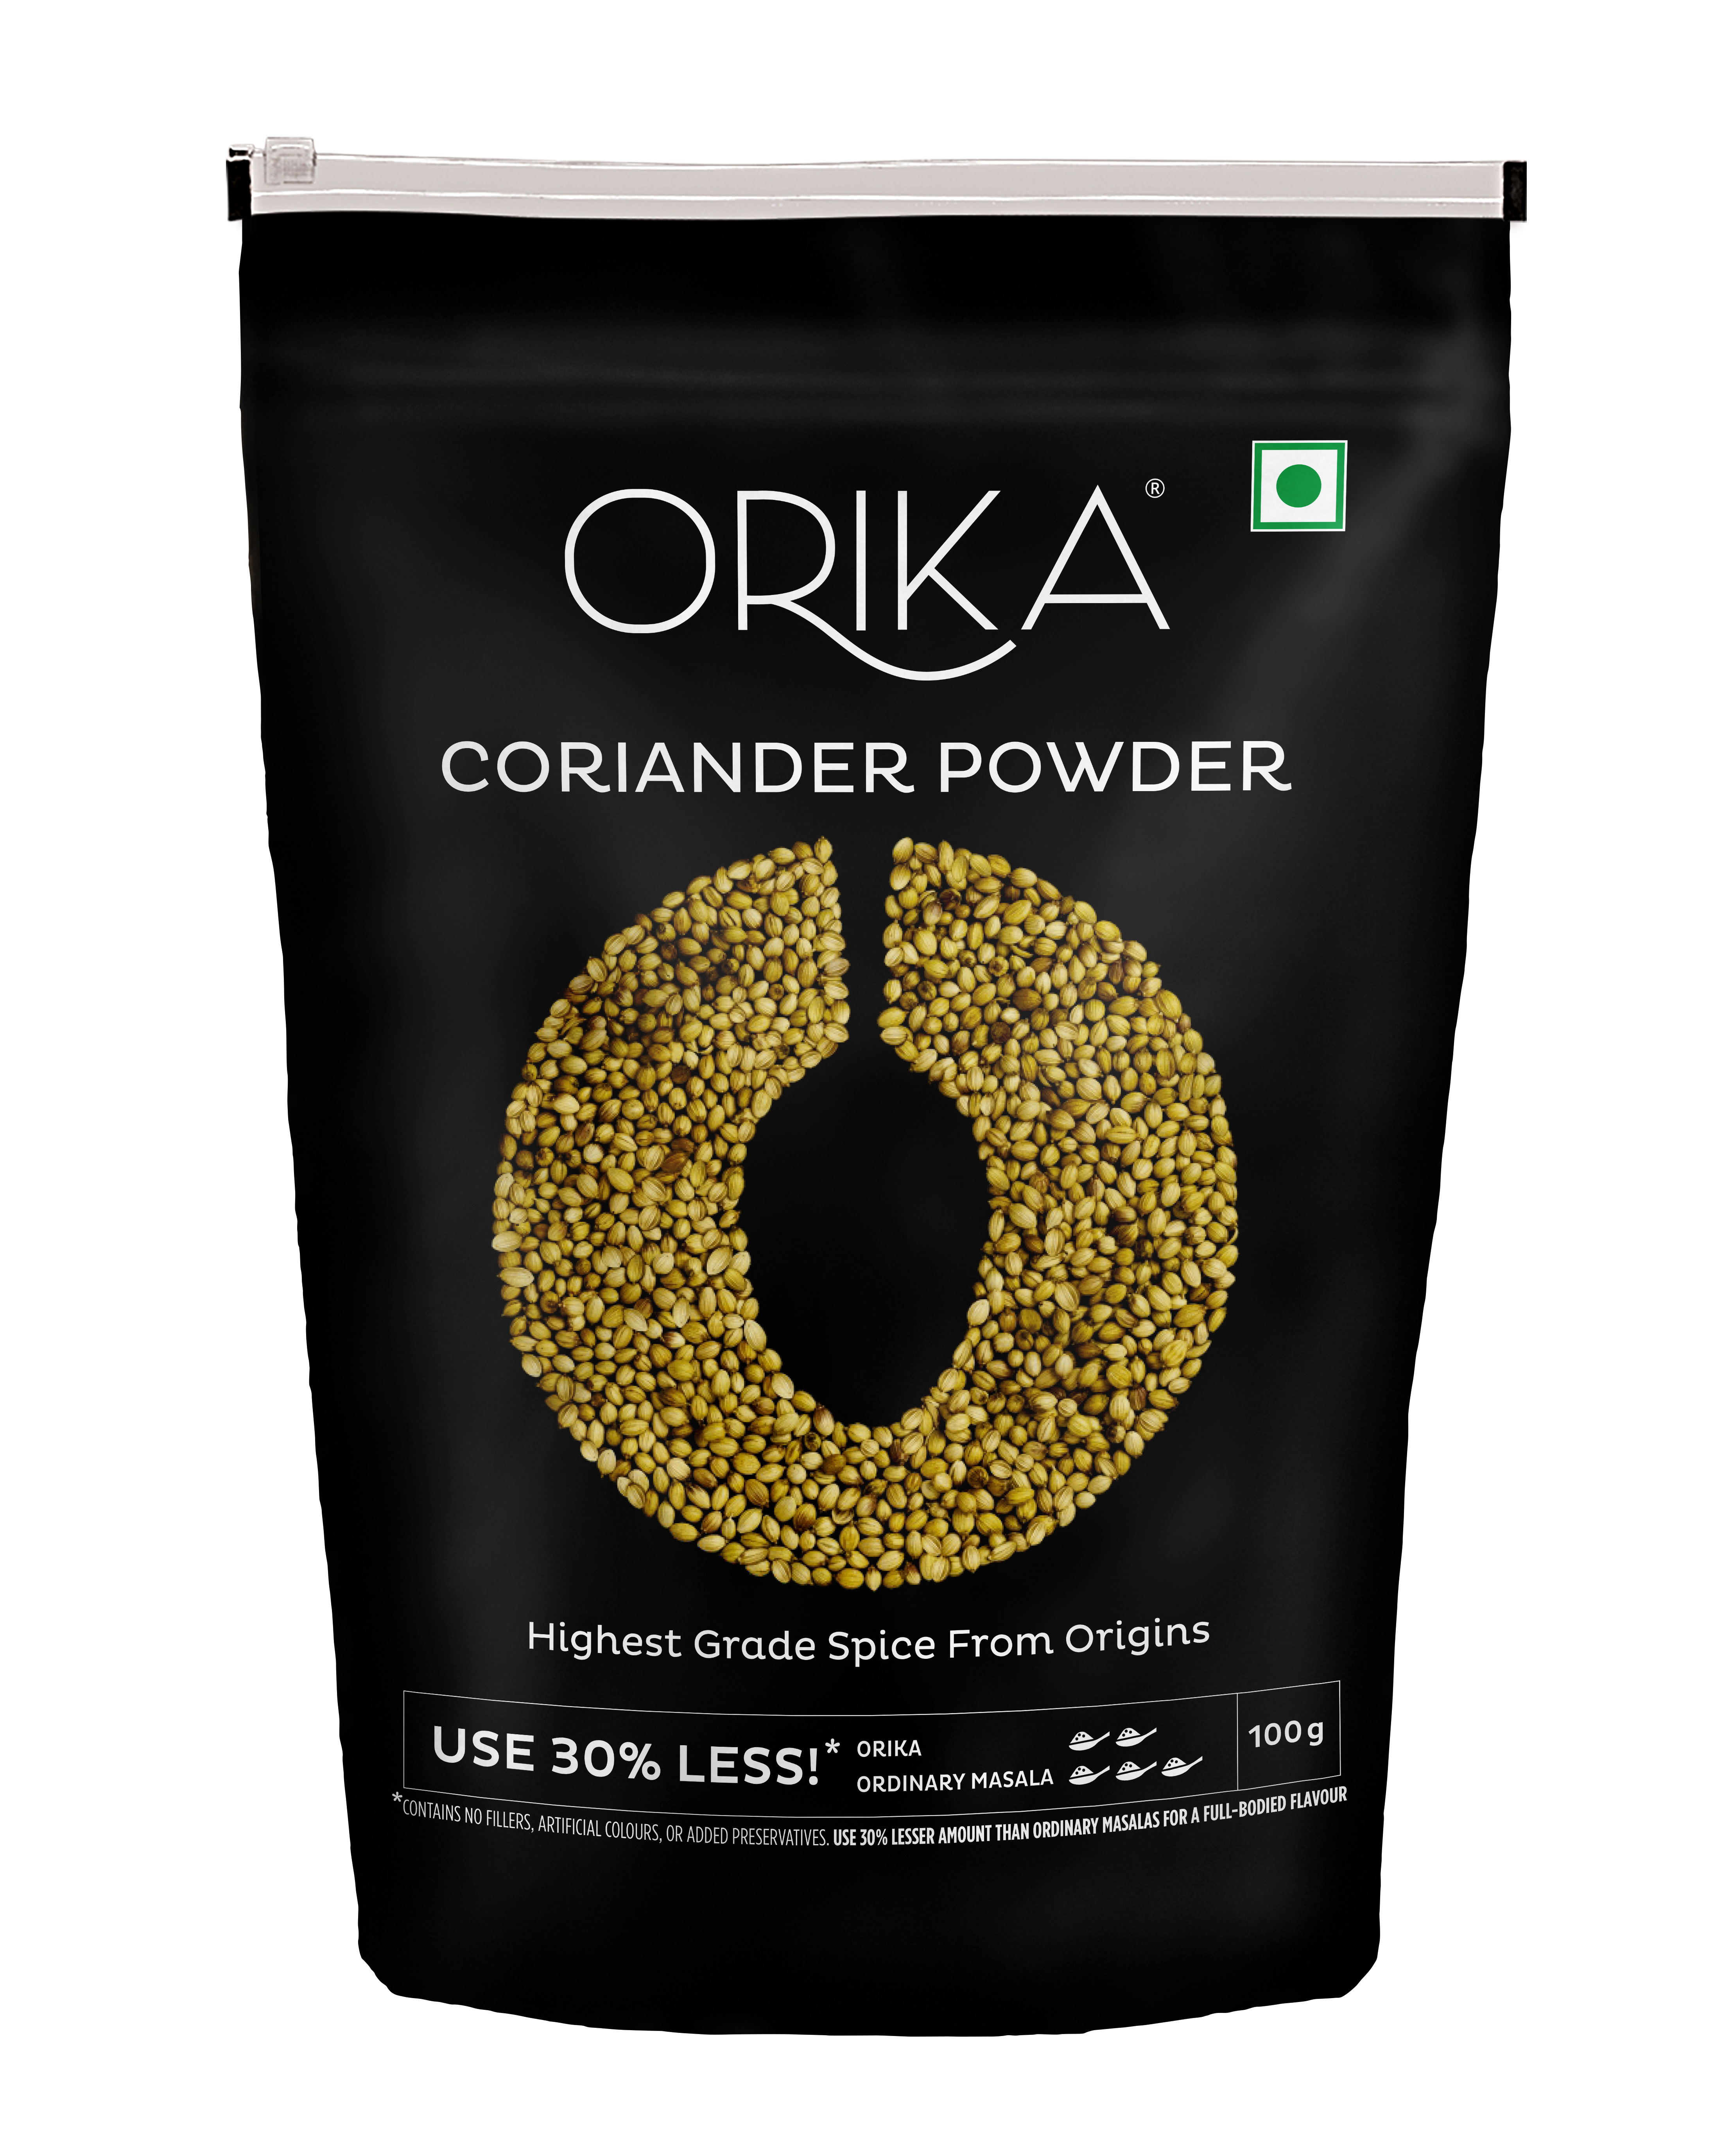 Orika Coriander Powder